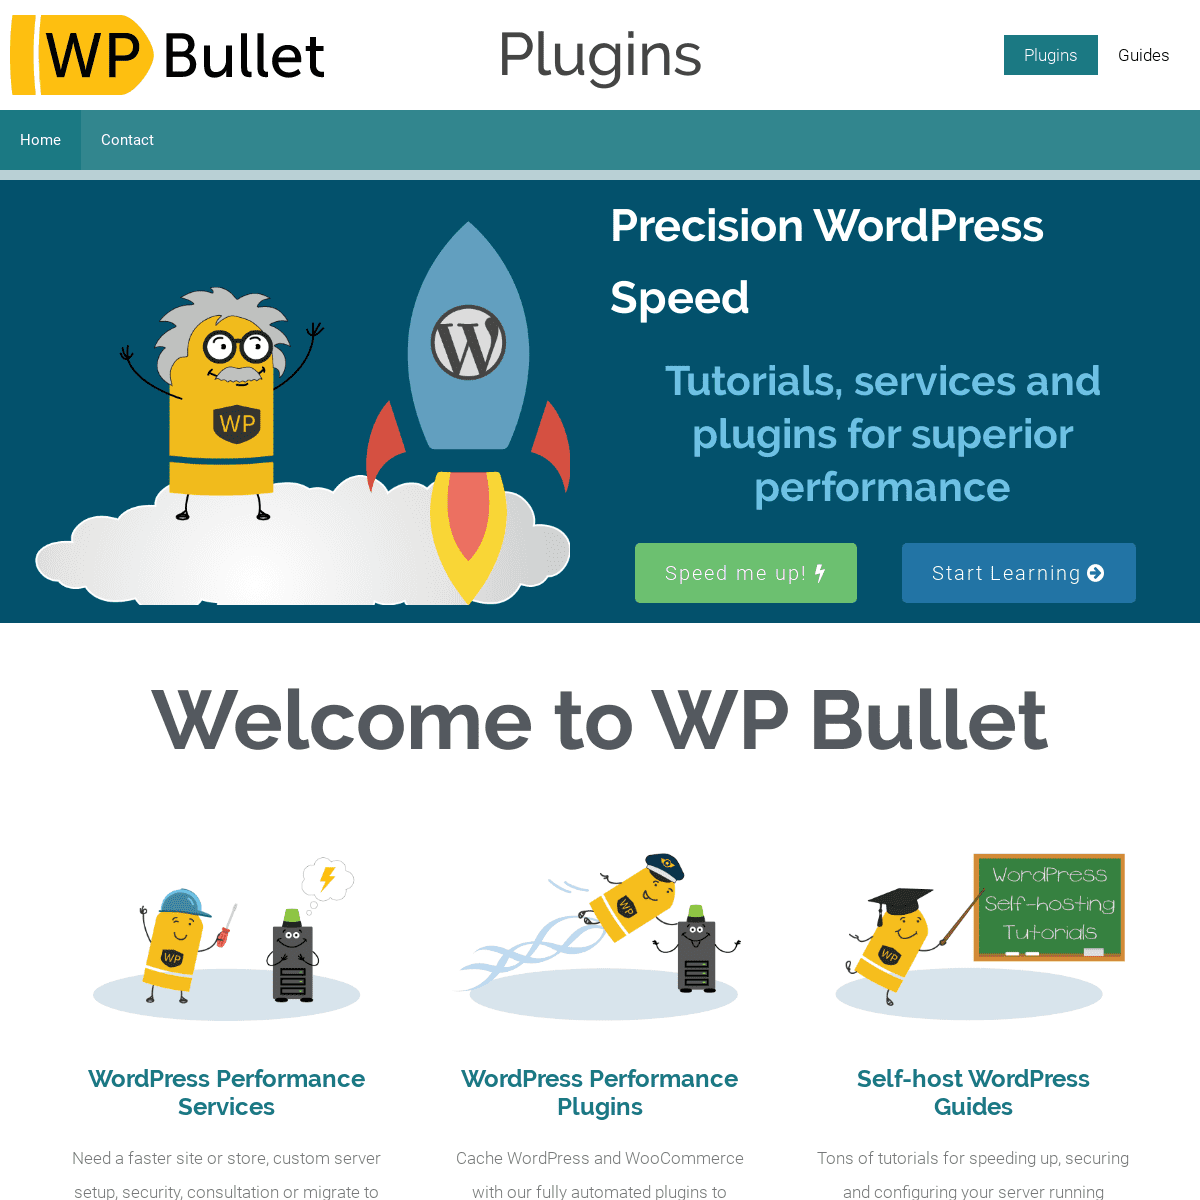 A complete backup of wp-bullet.com